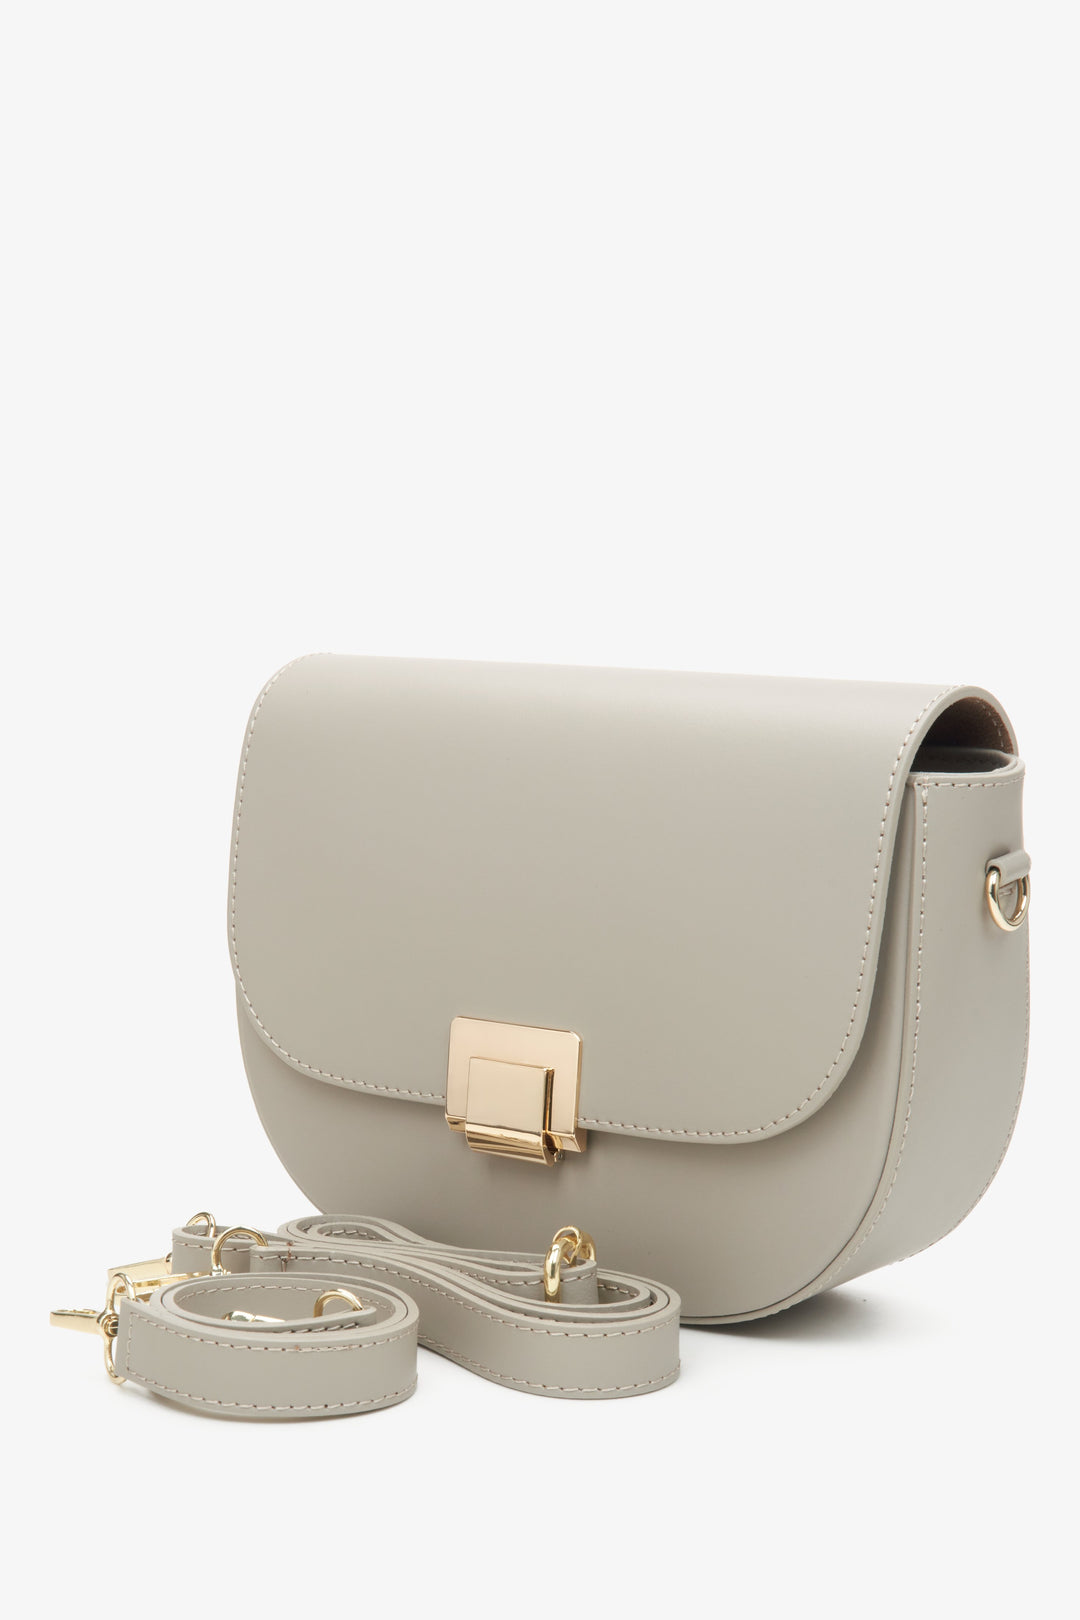 Estro women's grey leather handbag with an adjustable strap.